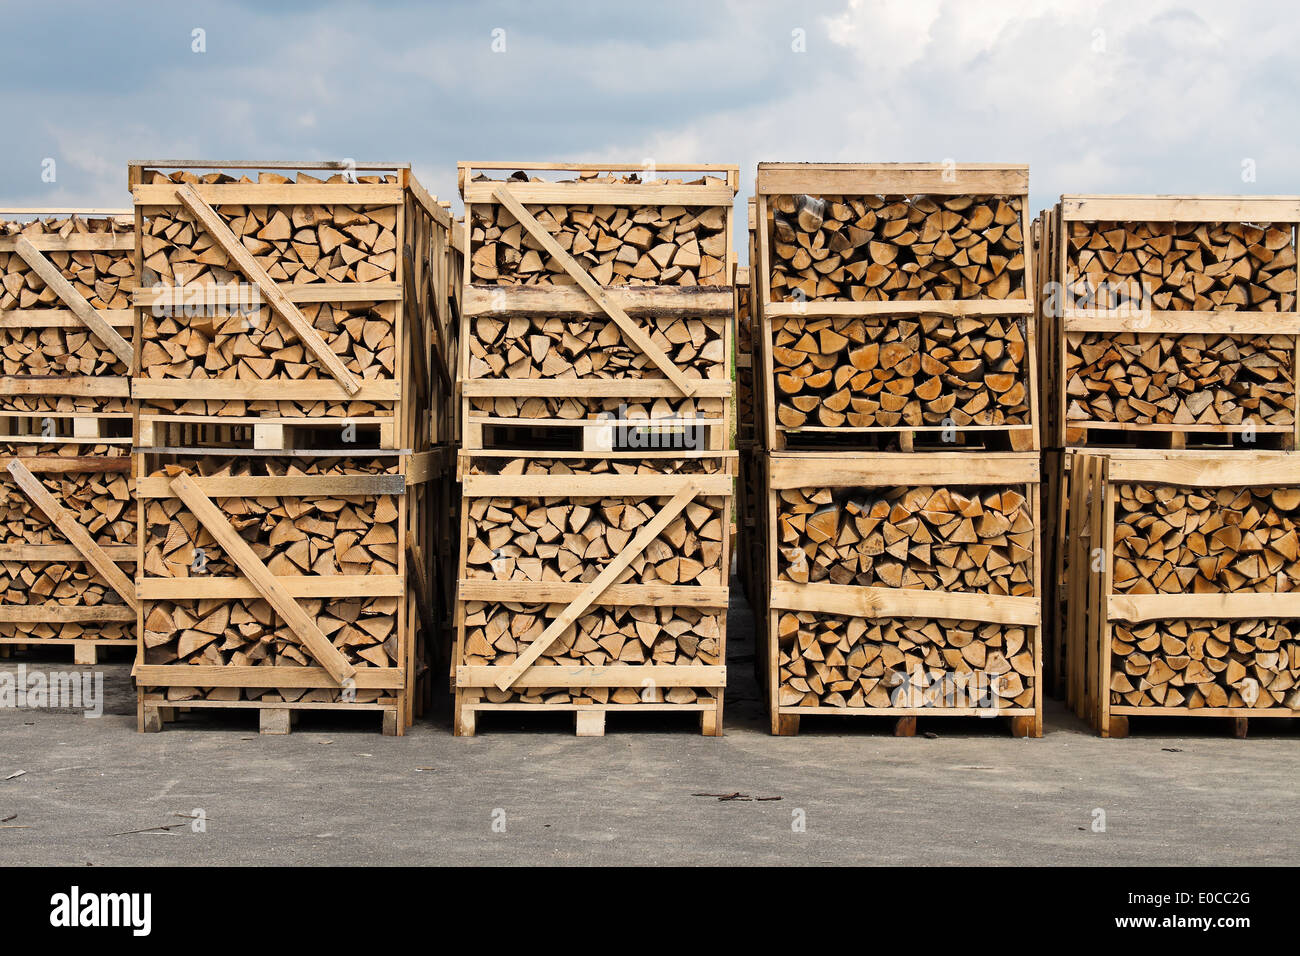 A big wood pile for firewood on a resting place, Ein grosser Holz Stapel fuer Brennholz auf einem Lagerplatz Stock Photo